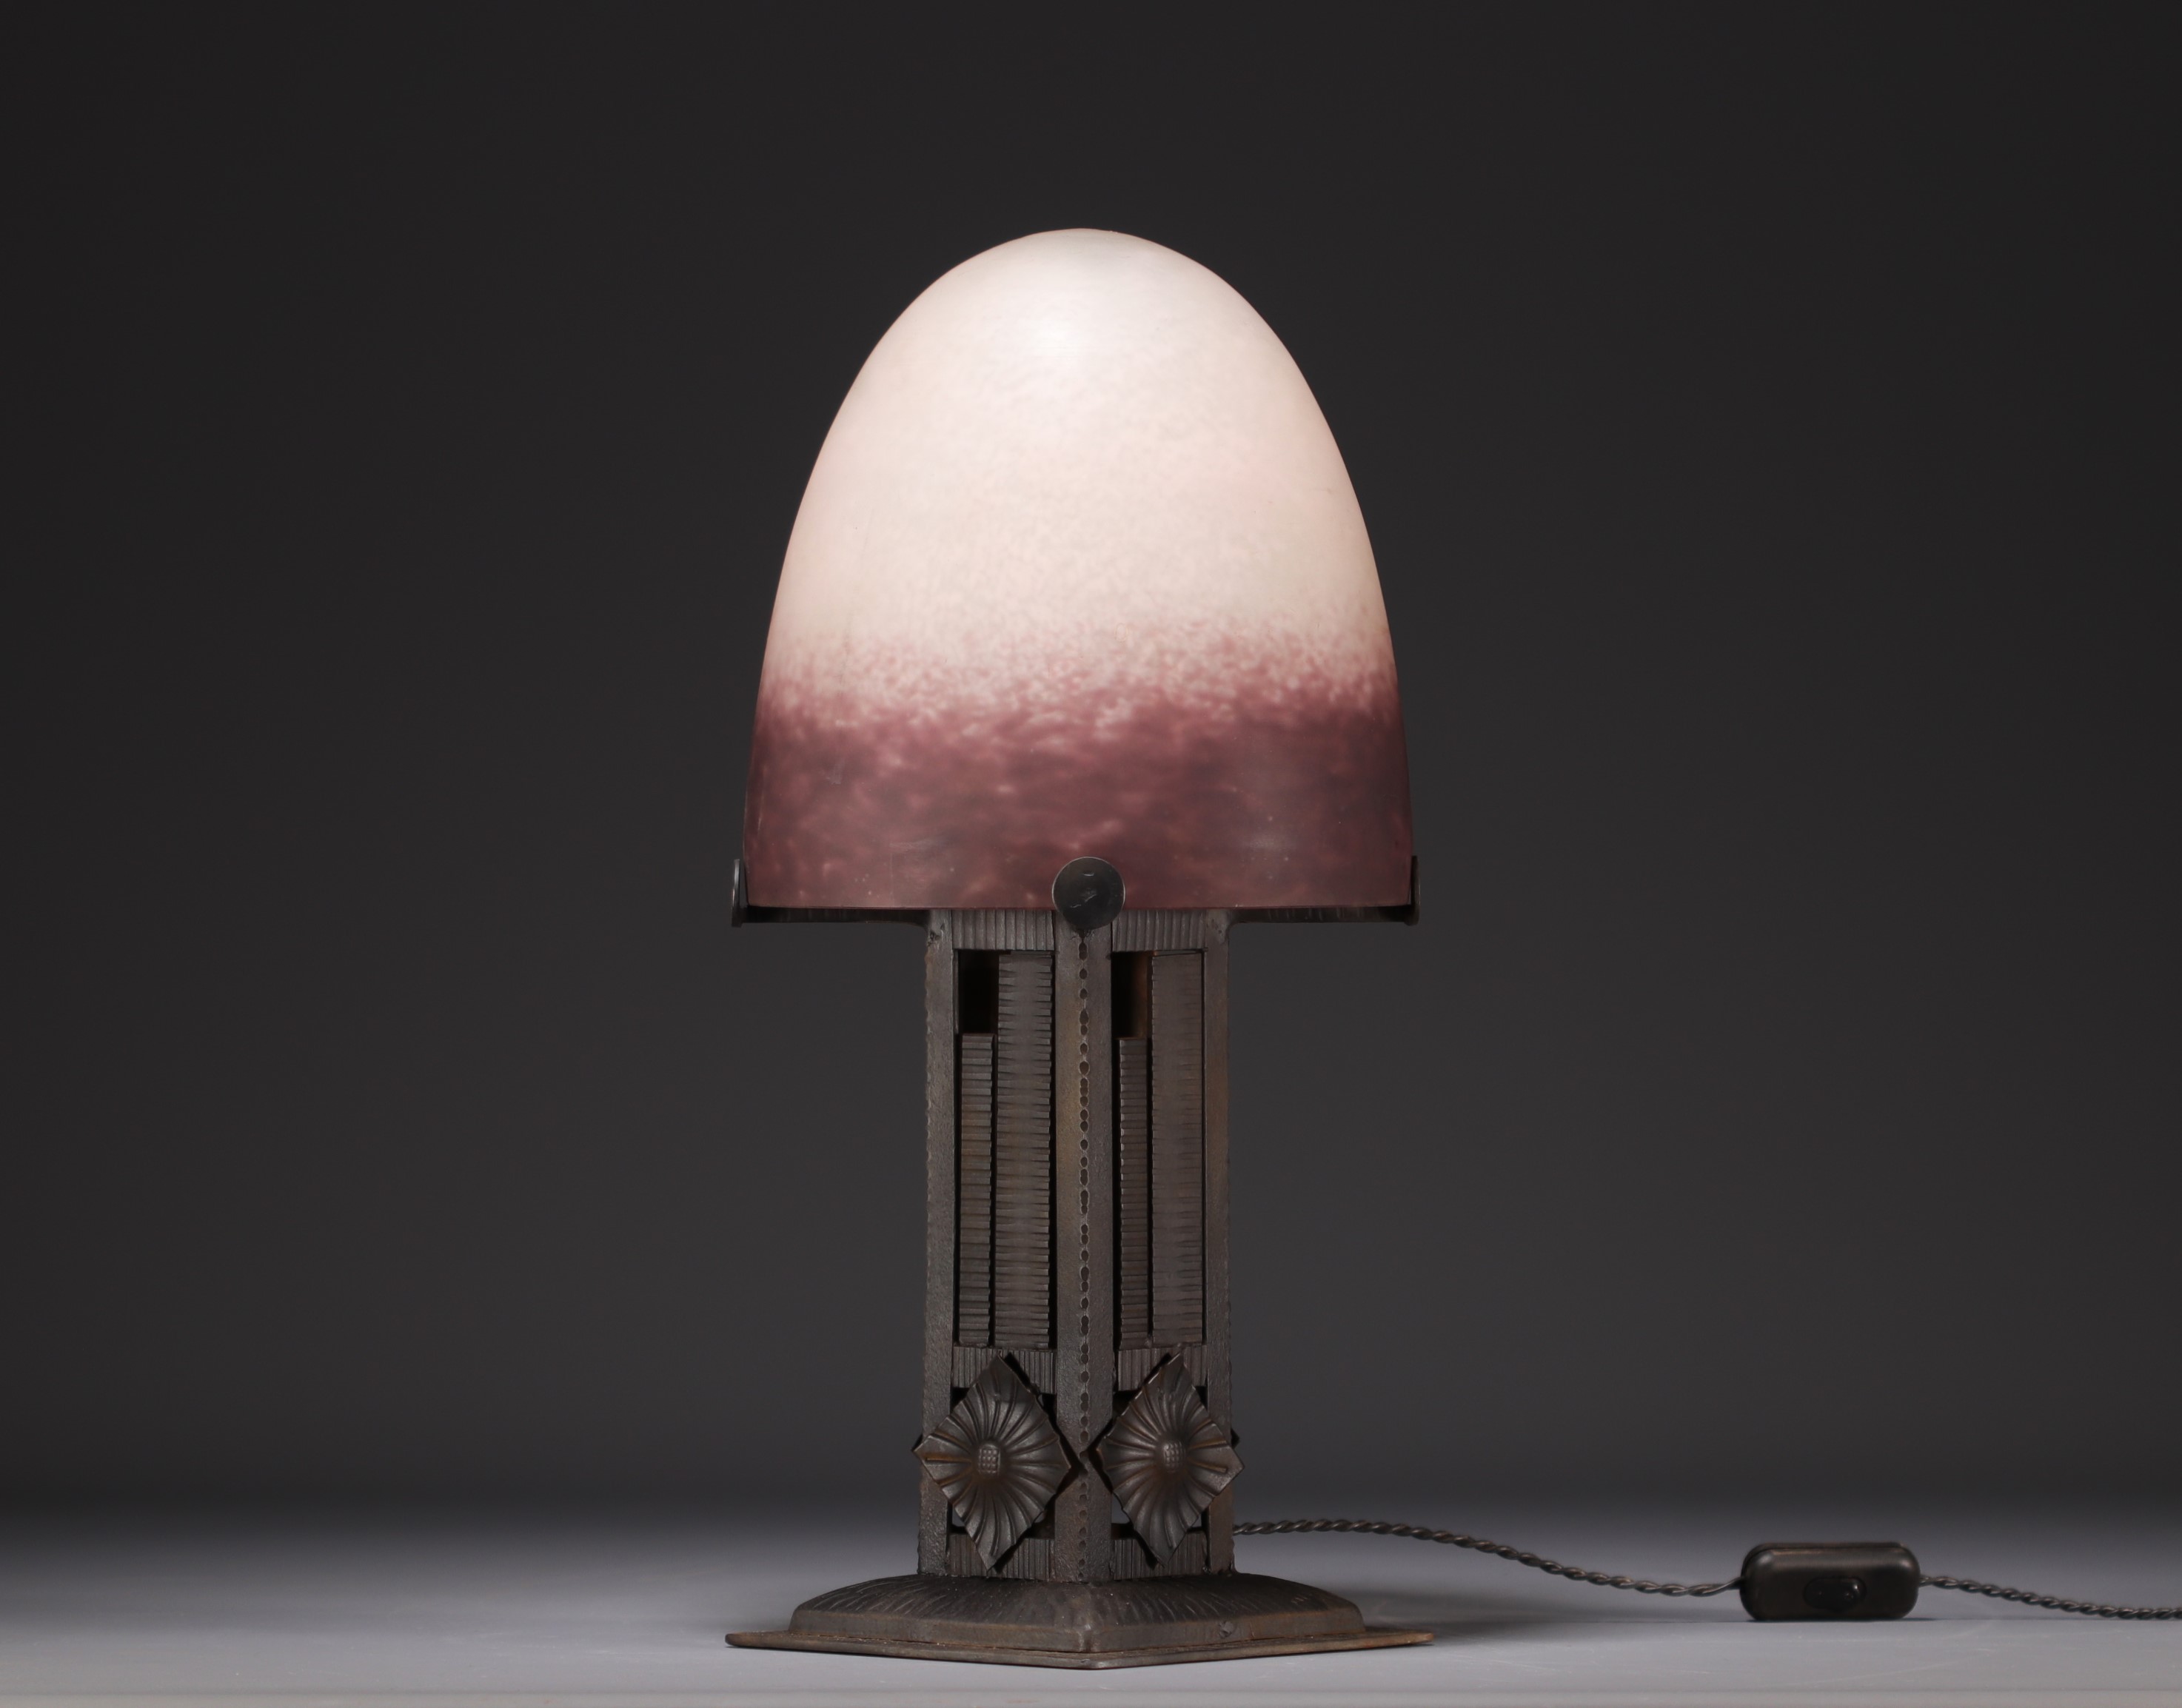 DEGUE Verrerie d'art - Mushroom lamp in shaded glass, wrought iron base, signed.